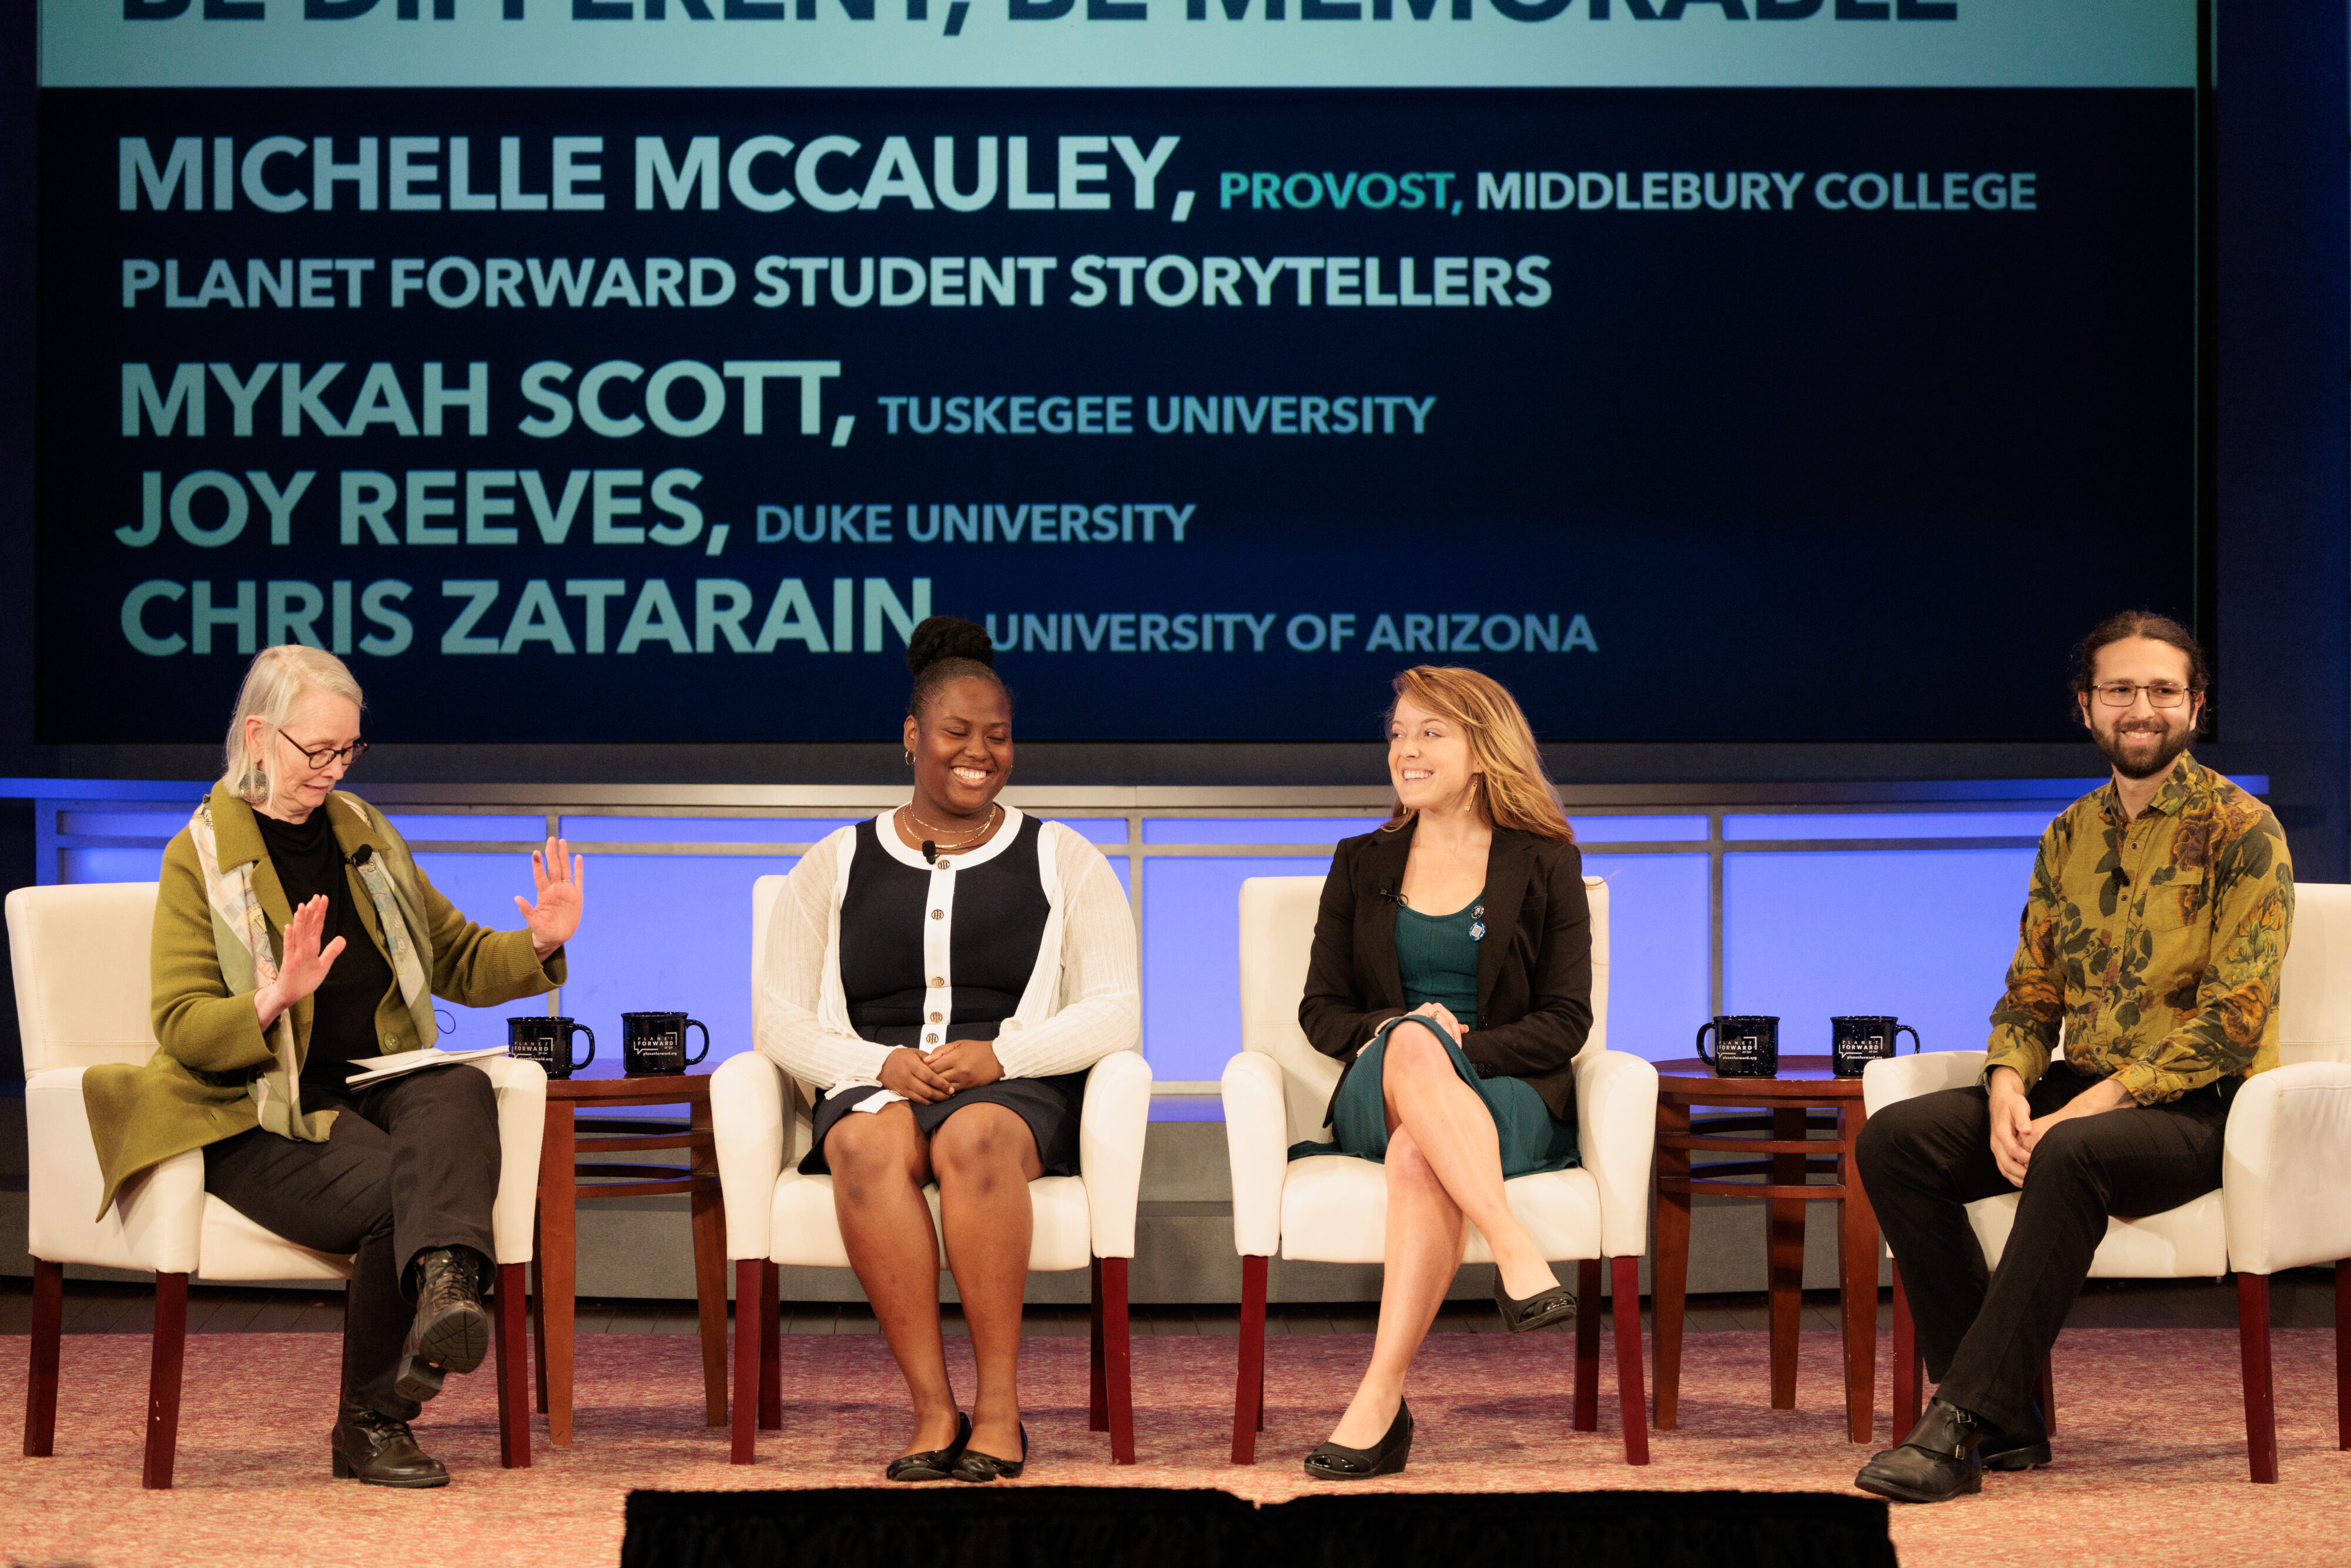 (From left to right) Michelle McCauley, Provost, Middlebury College; Mykah Scott, Tuskegee University; Joy Reeves, Duke University; Chris Zatarain, University of Arizona.